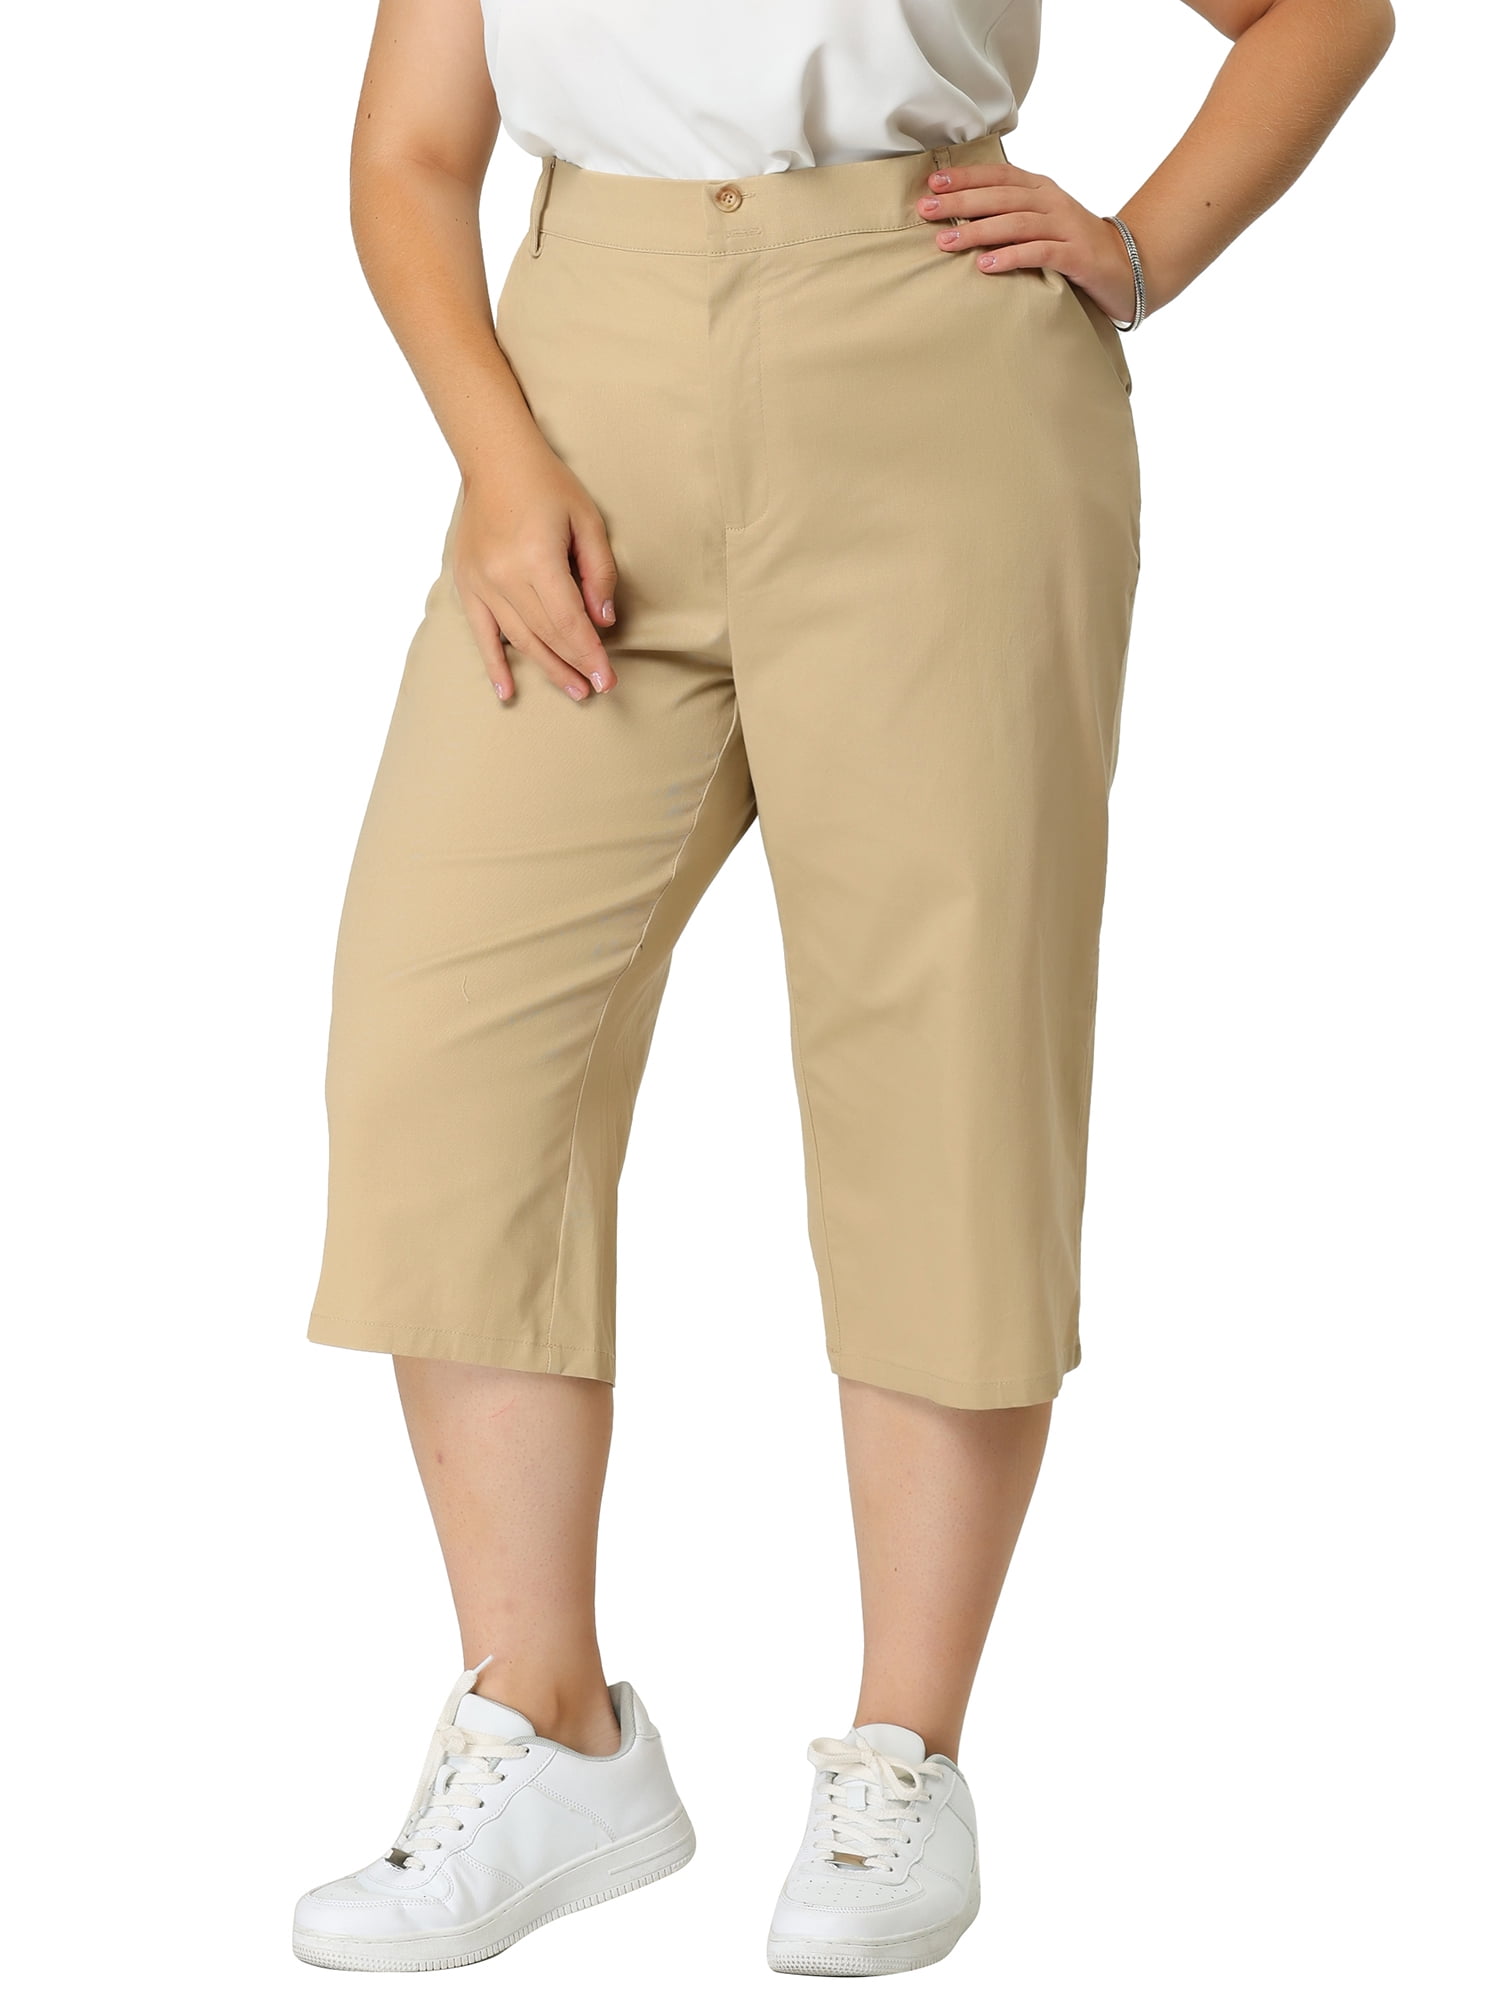 Women's Plus Size Capris Pants White or Tan/Khaki Elastic Waist Style K32 NEW 